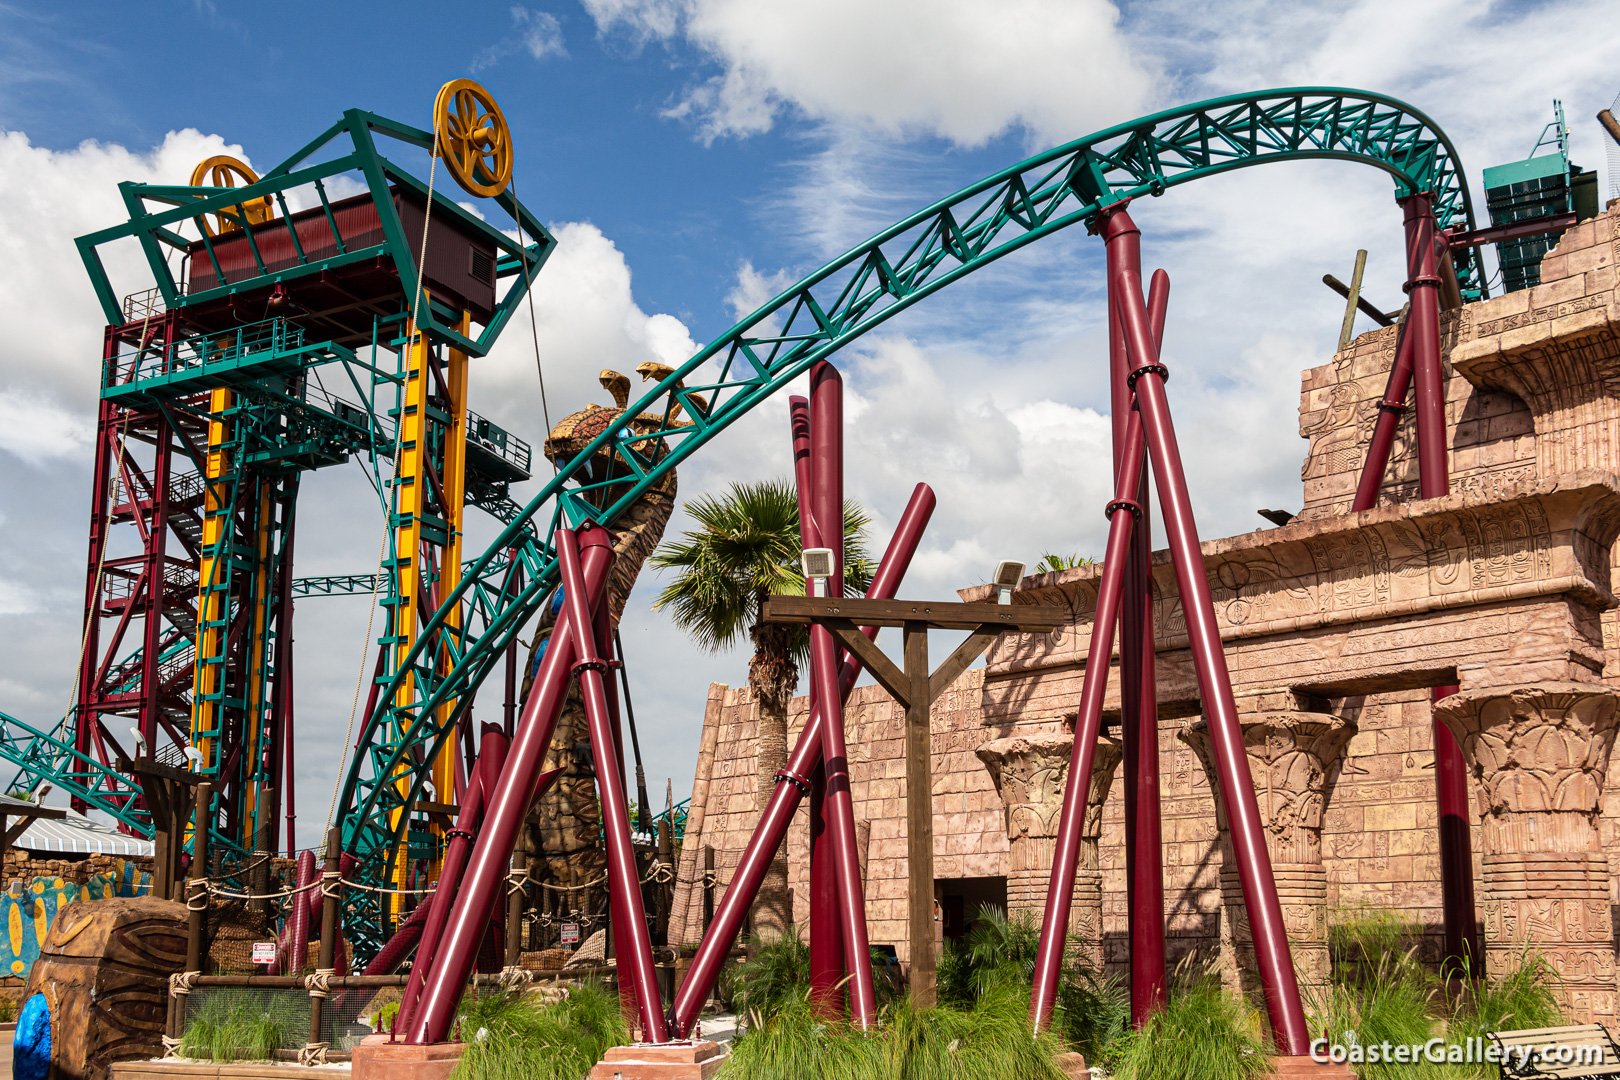 Cobra's Curse and Montu roller coasters at Busch Gardens Tampa